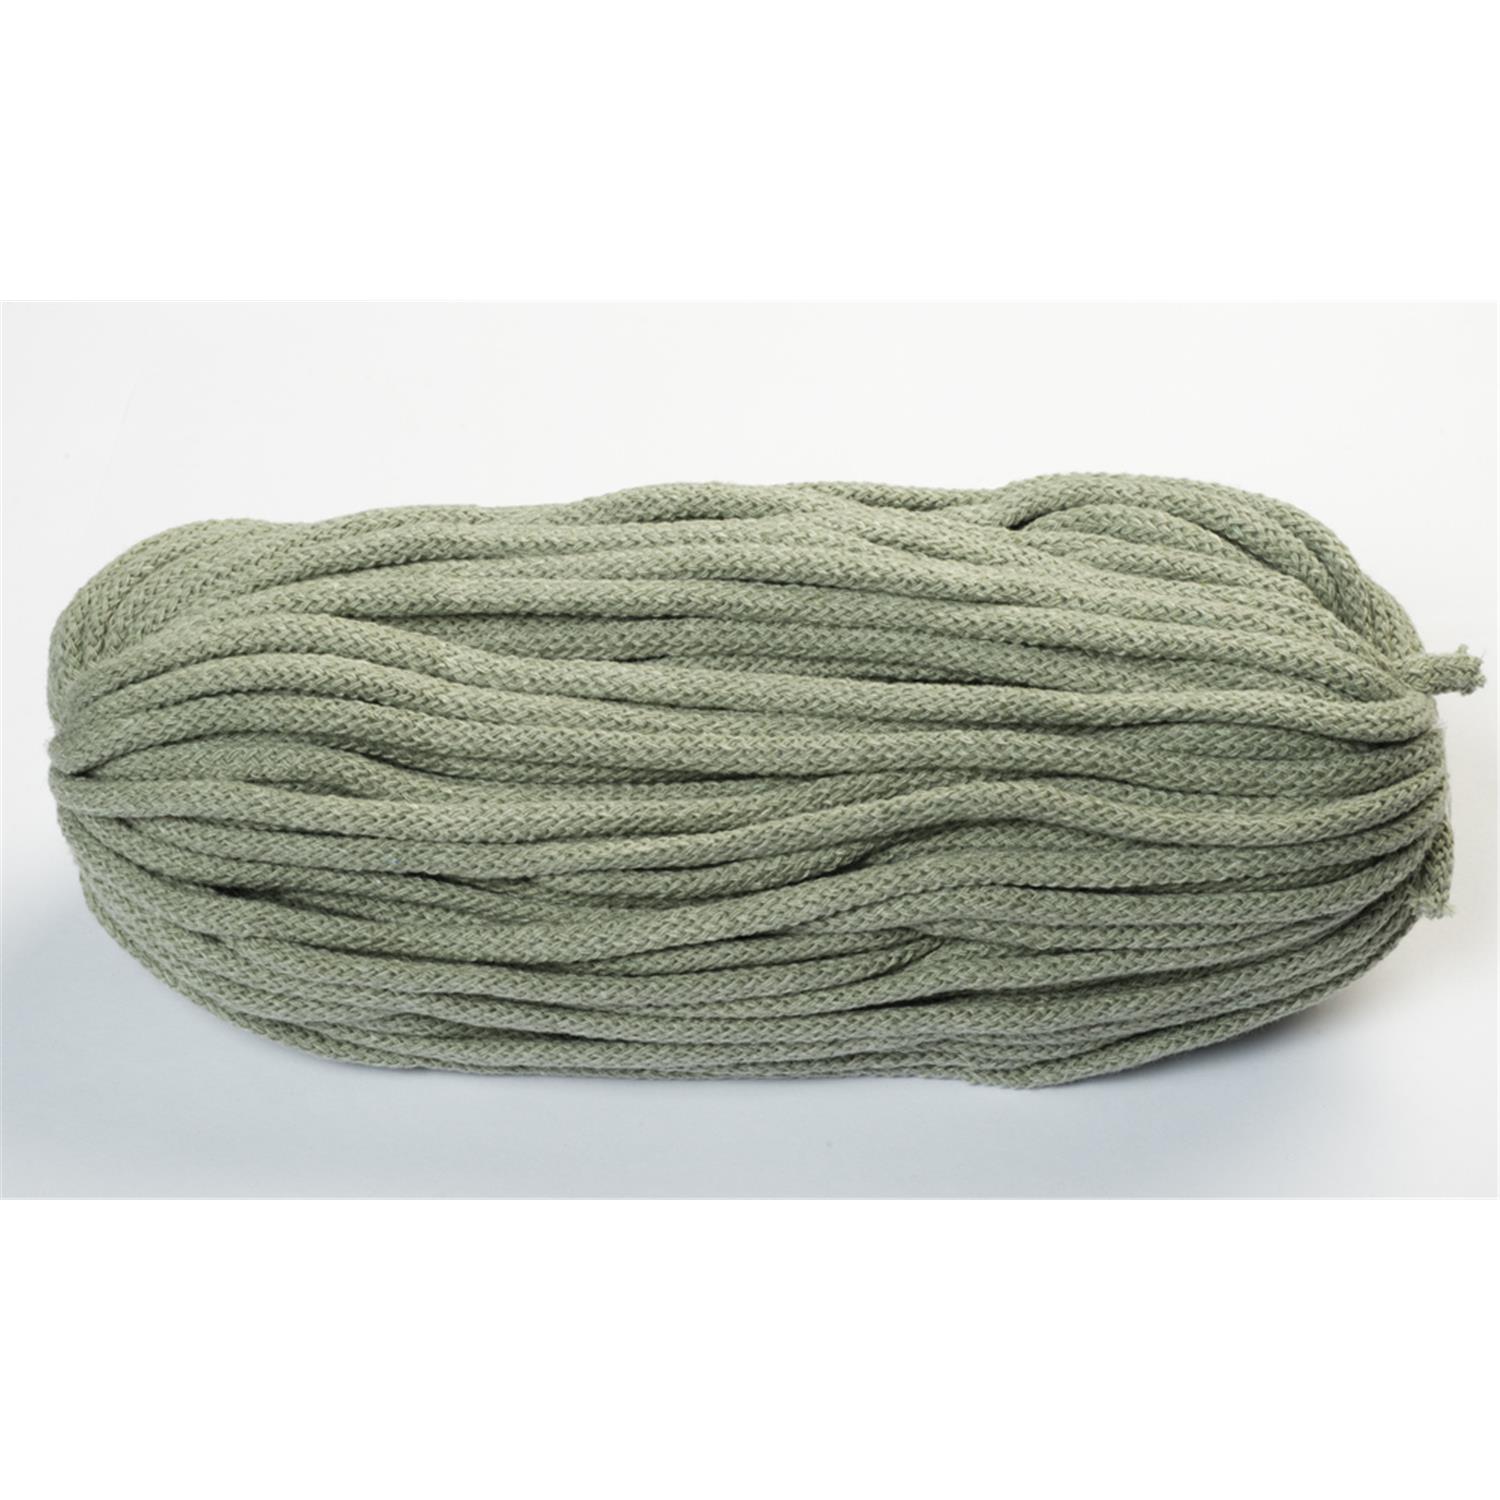 Baumwollkordel, 50 Meter, 6 mm Ø mit Kern, khaki/grün #08